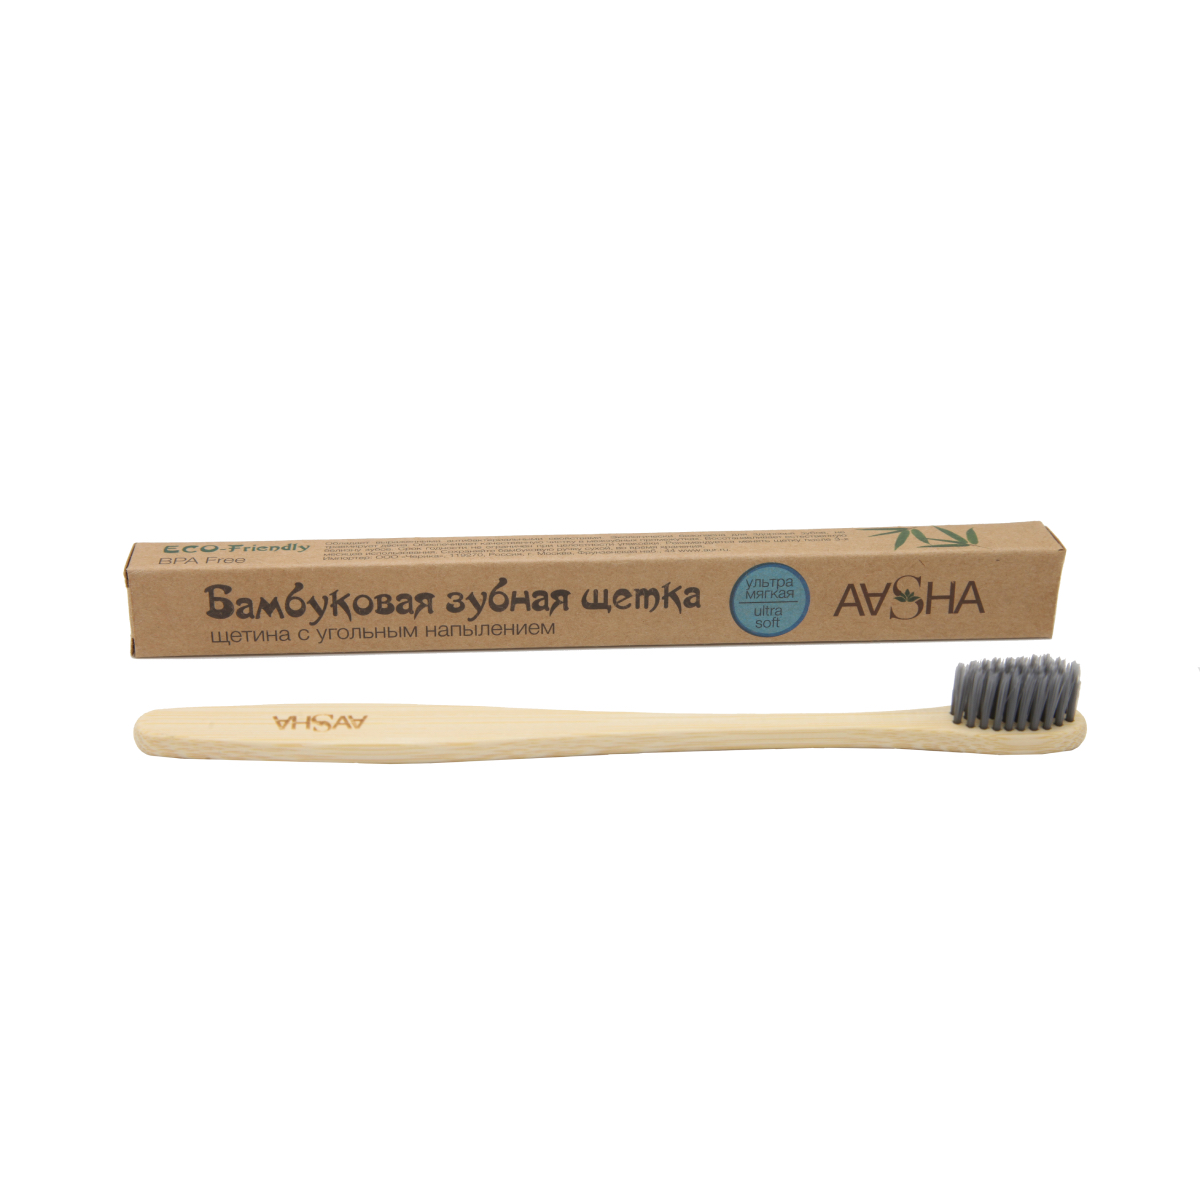 Бамбуковая зубная щетка Aasha с угольным напылением ULTRA SOFT (Ультра мягкая), 1 шт. бамбуковая зубная щетка aasha с угольным напылением soft мягкая 1 шт